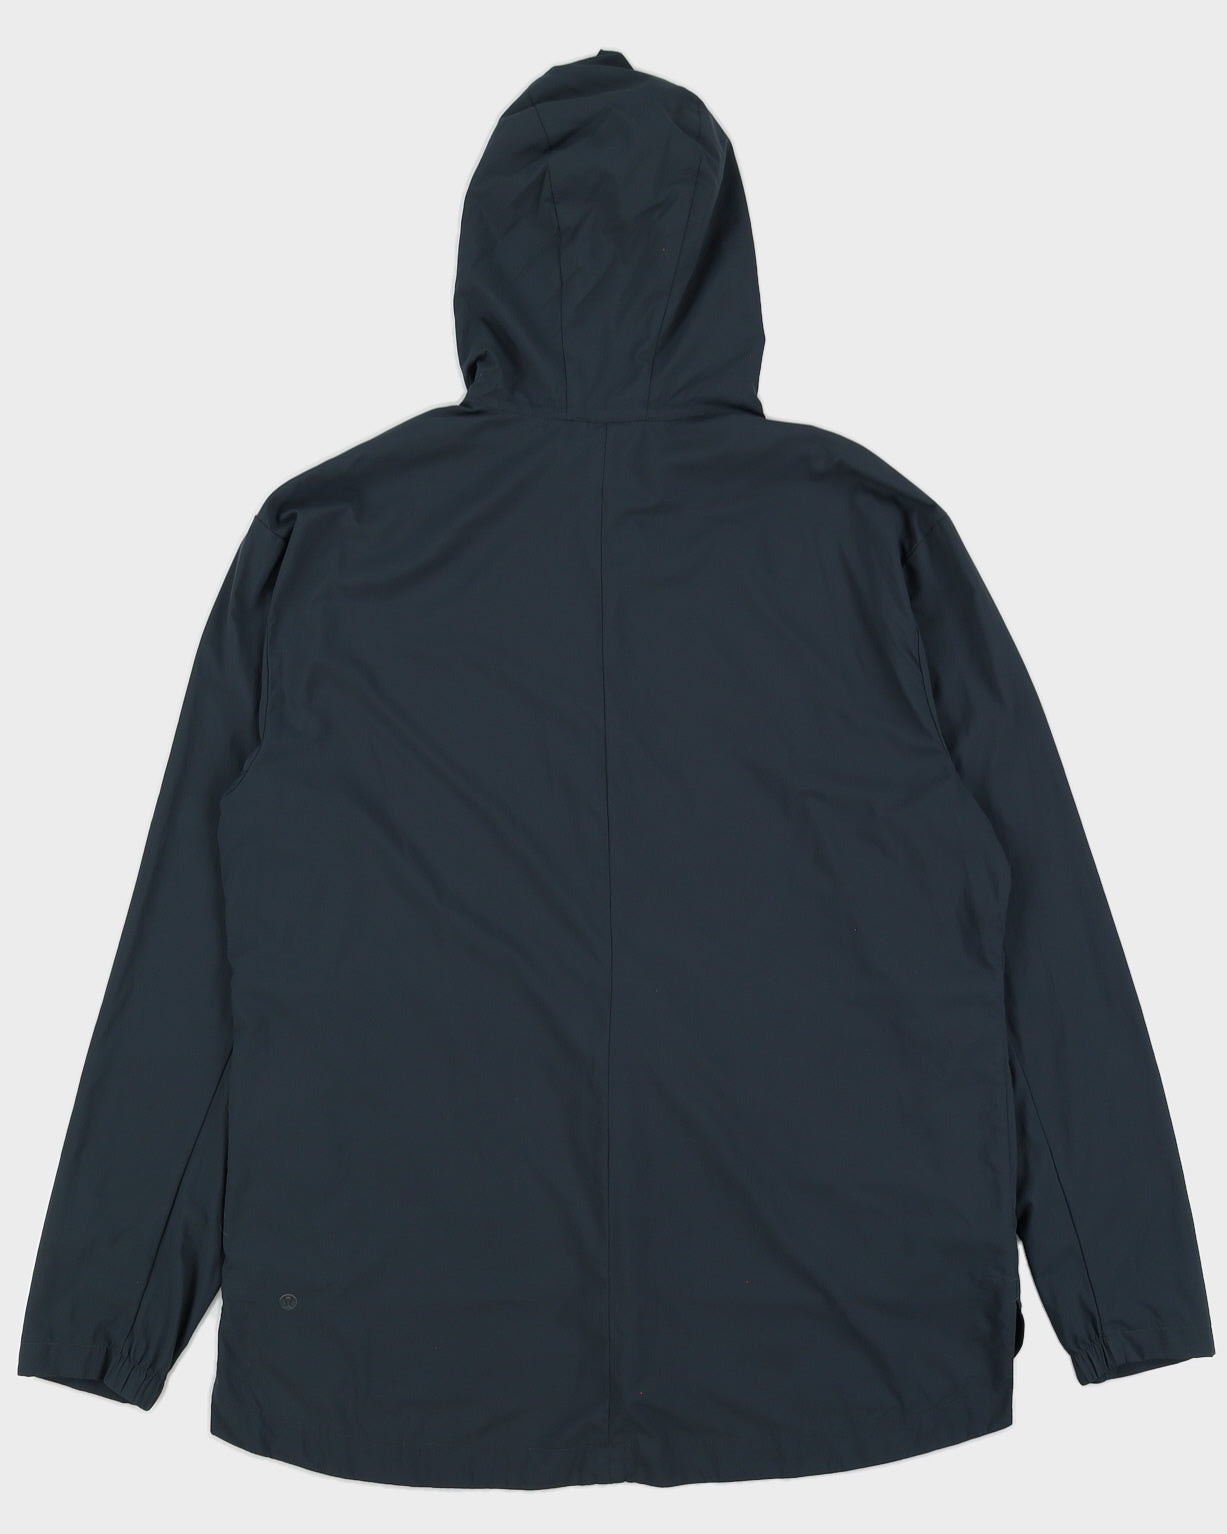 Lululemon Men's Navy Quarter Zip Hooded Jacket - XL